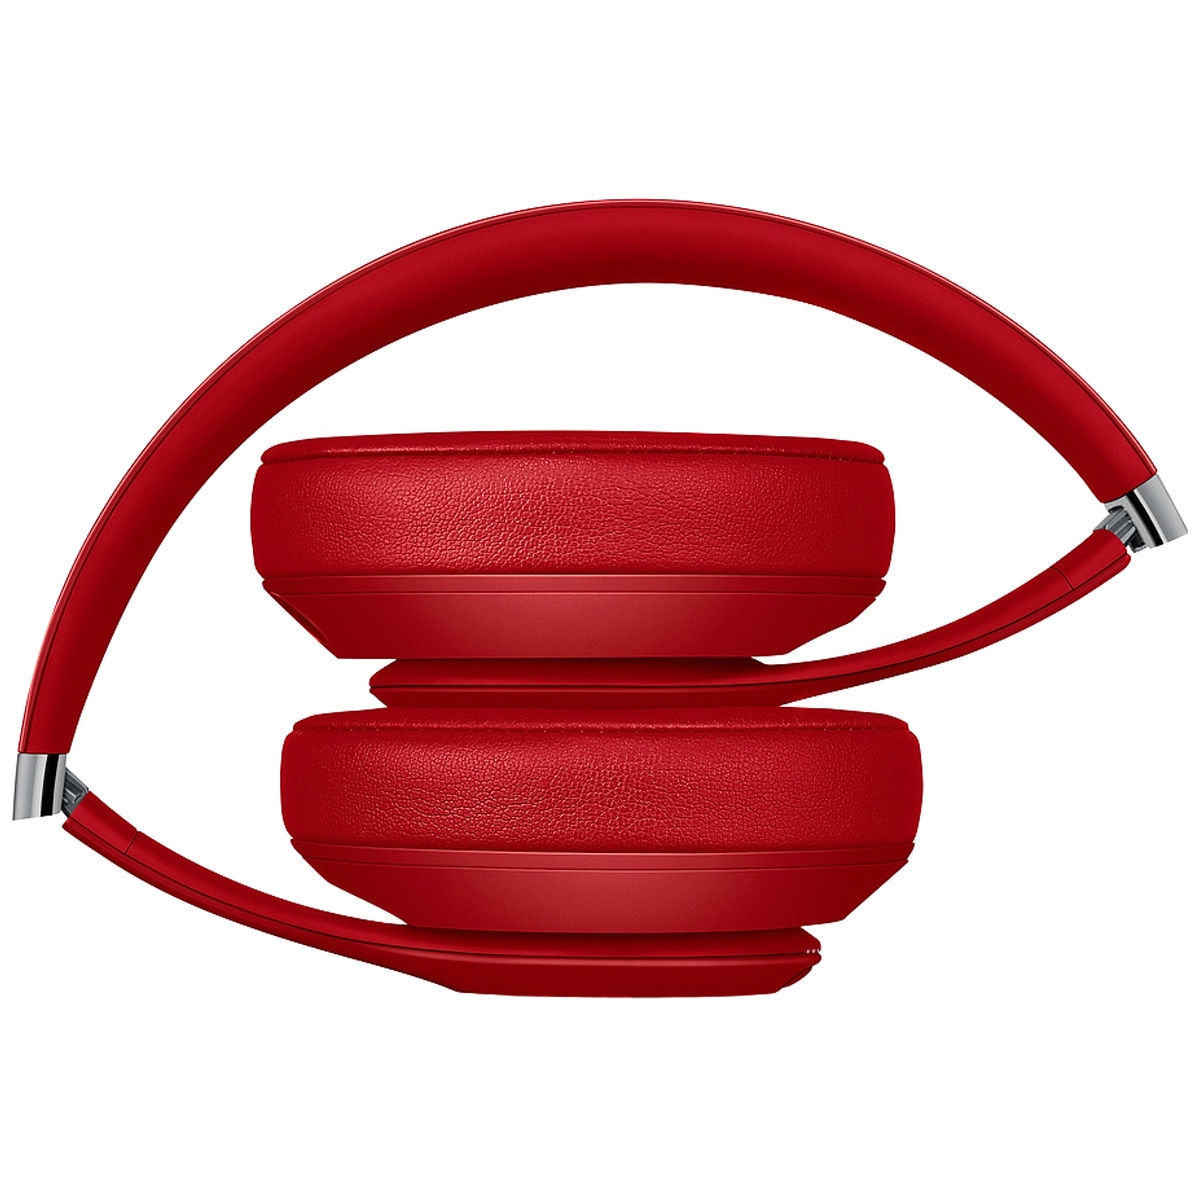 Beats Studio3 Wireless Headphones - Red MQD02PA/A